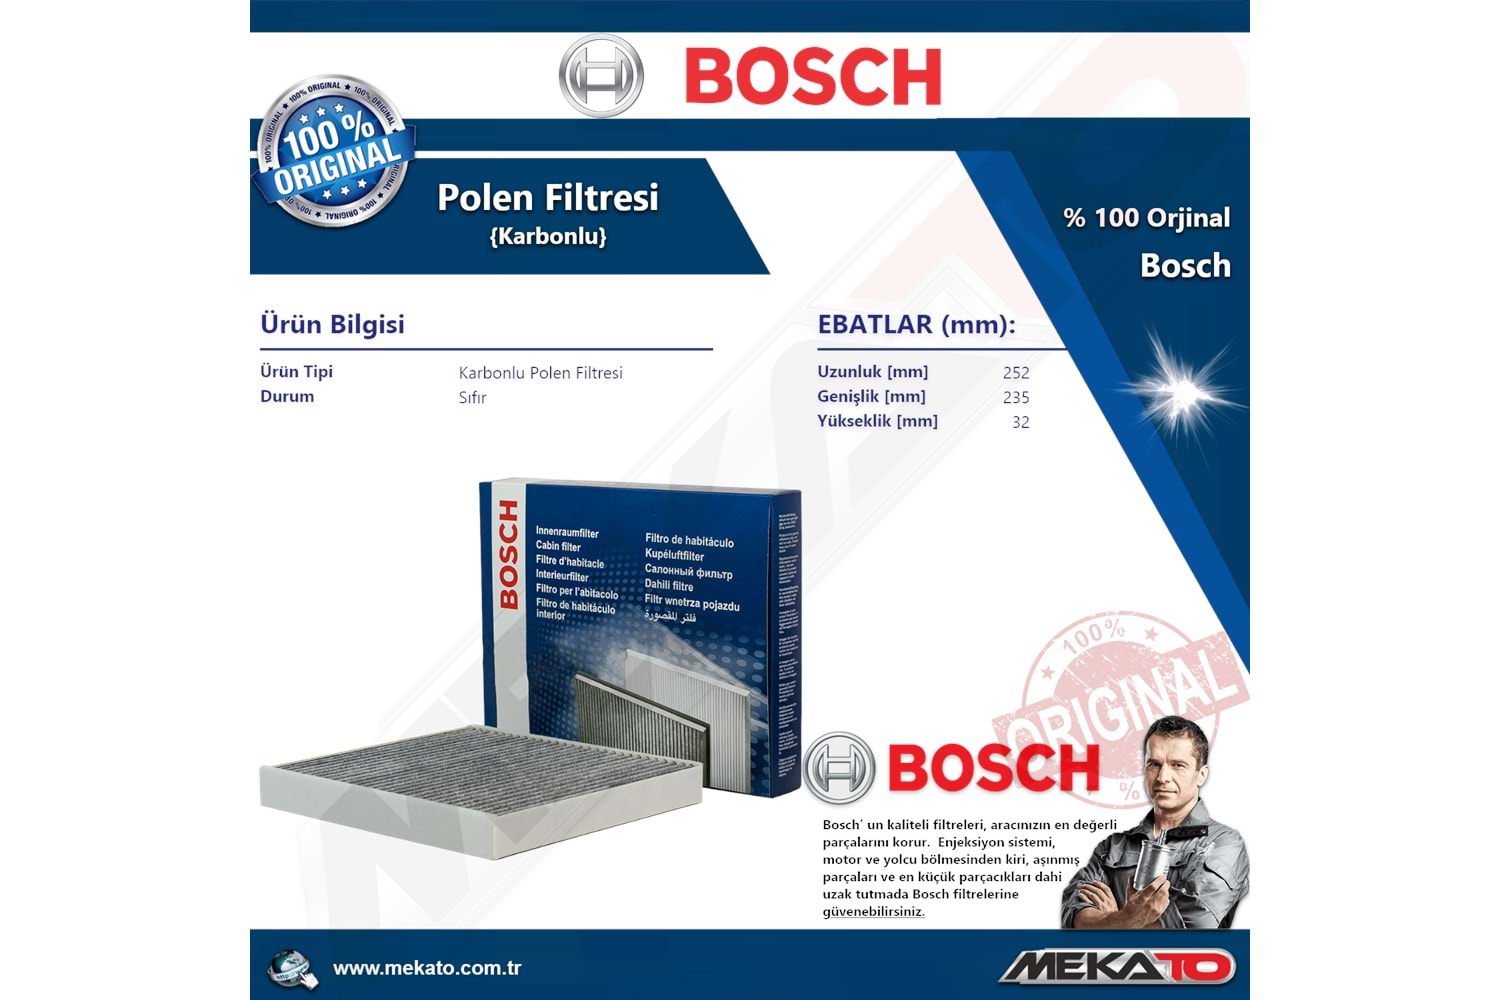 Vw Golf 7 1.4 TSI 3 Lü Bosch Karbonlu Filtre Seti 2013-2019